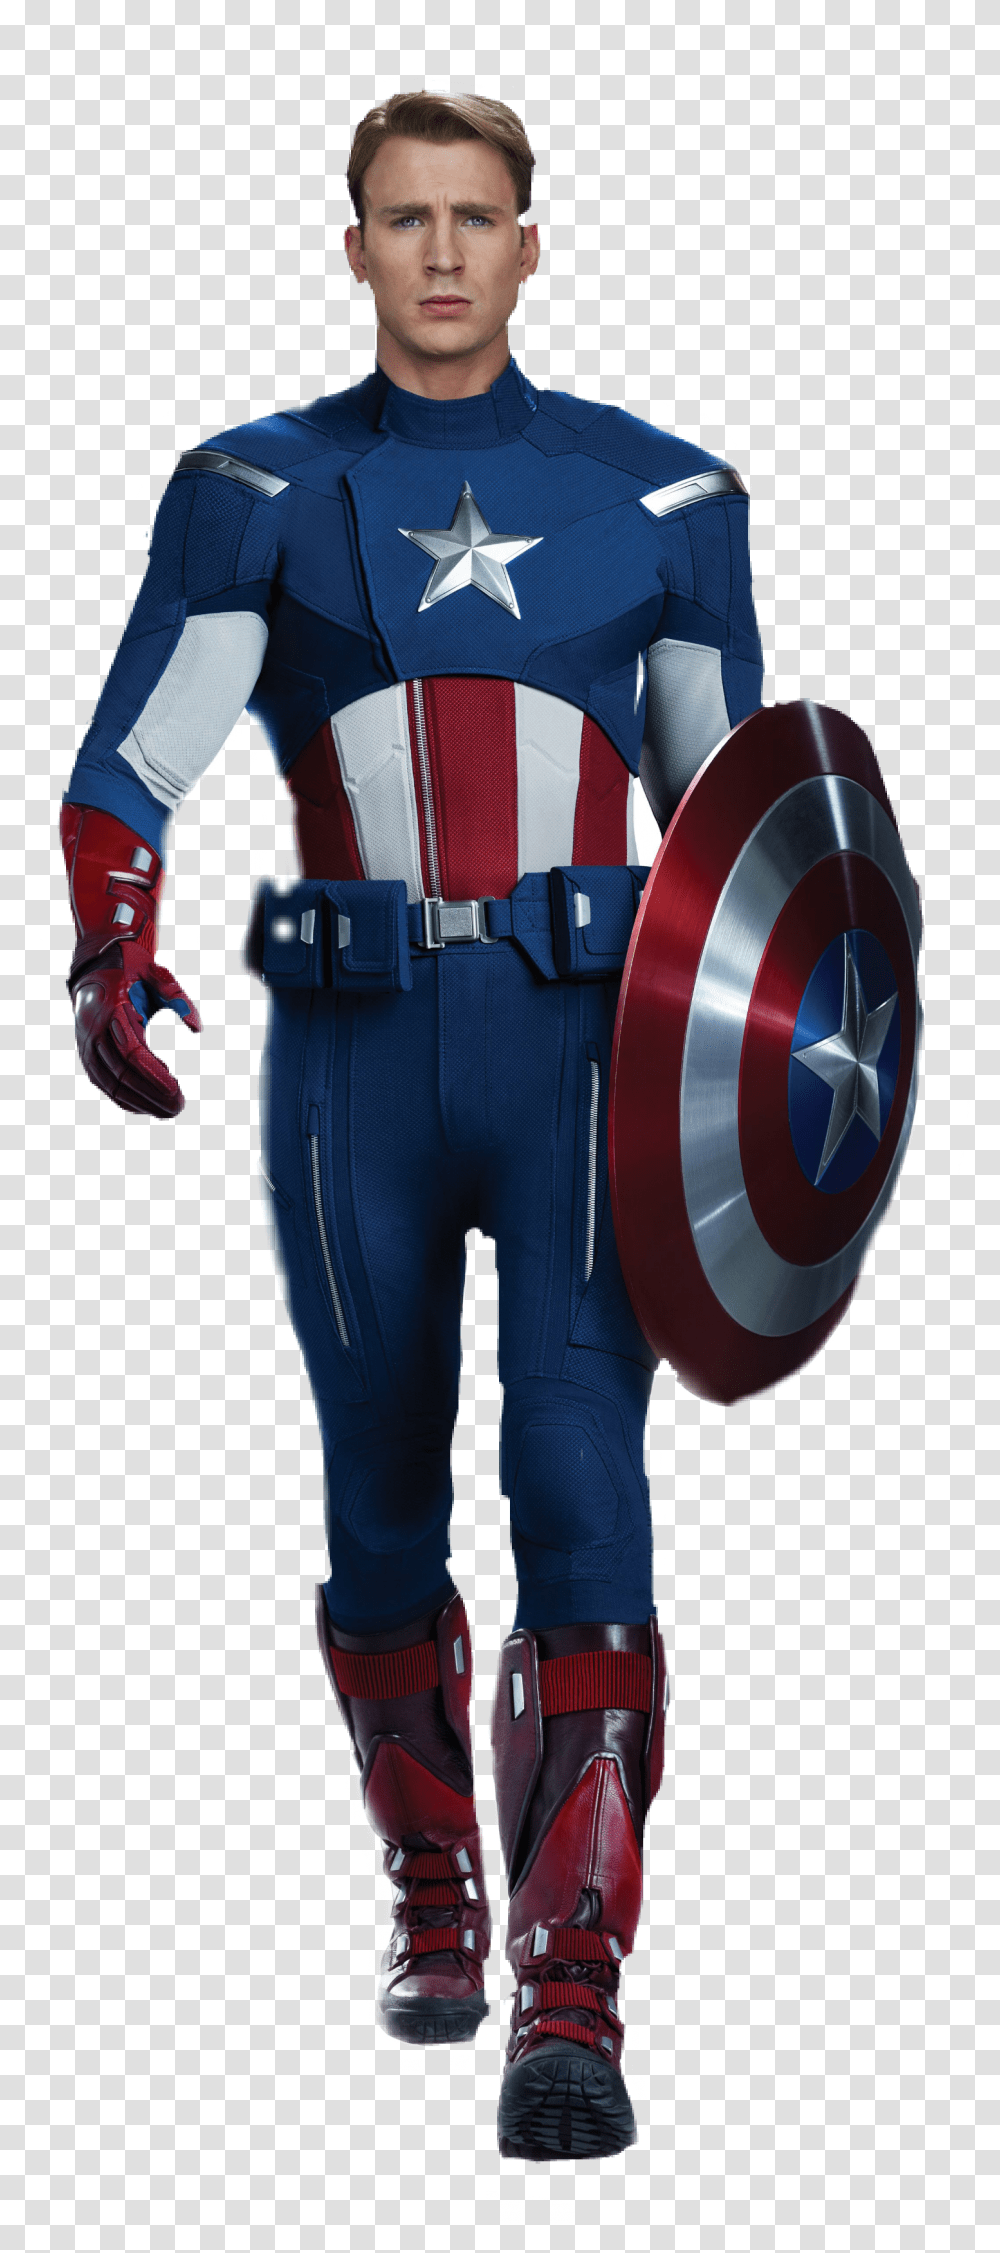 Capitanamerica Marvel Capitaoamerica Avengers Vingado Captain America Avengers, Person, Costume, Armor Transparent Png